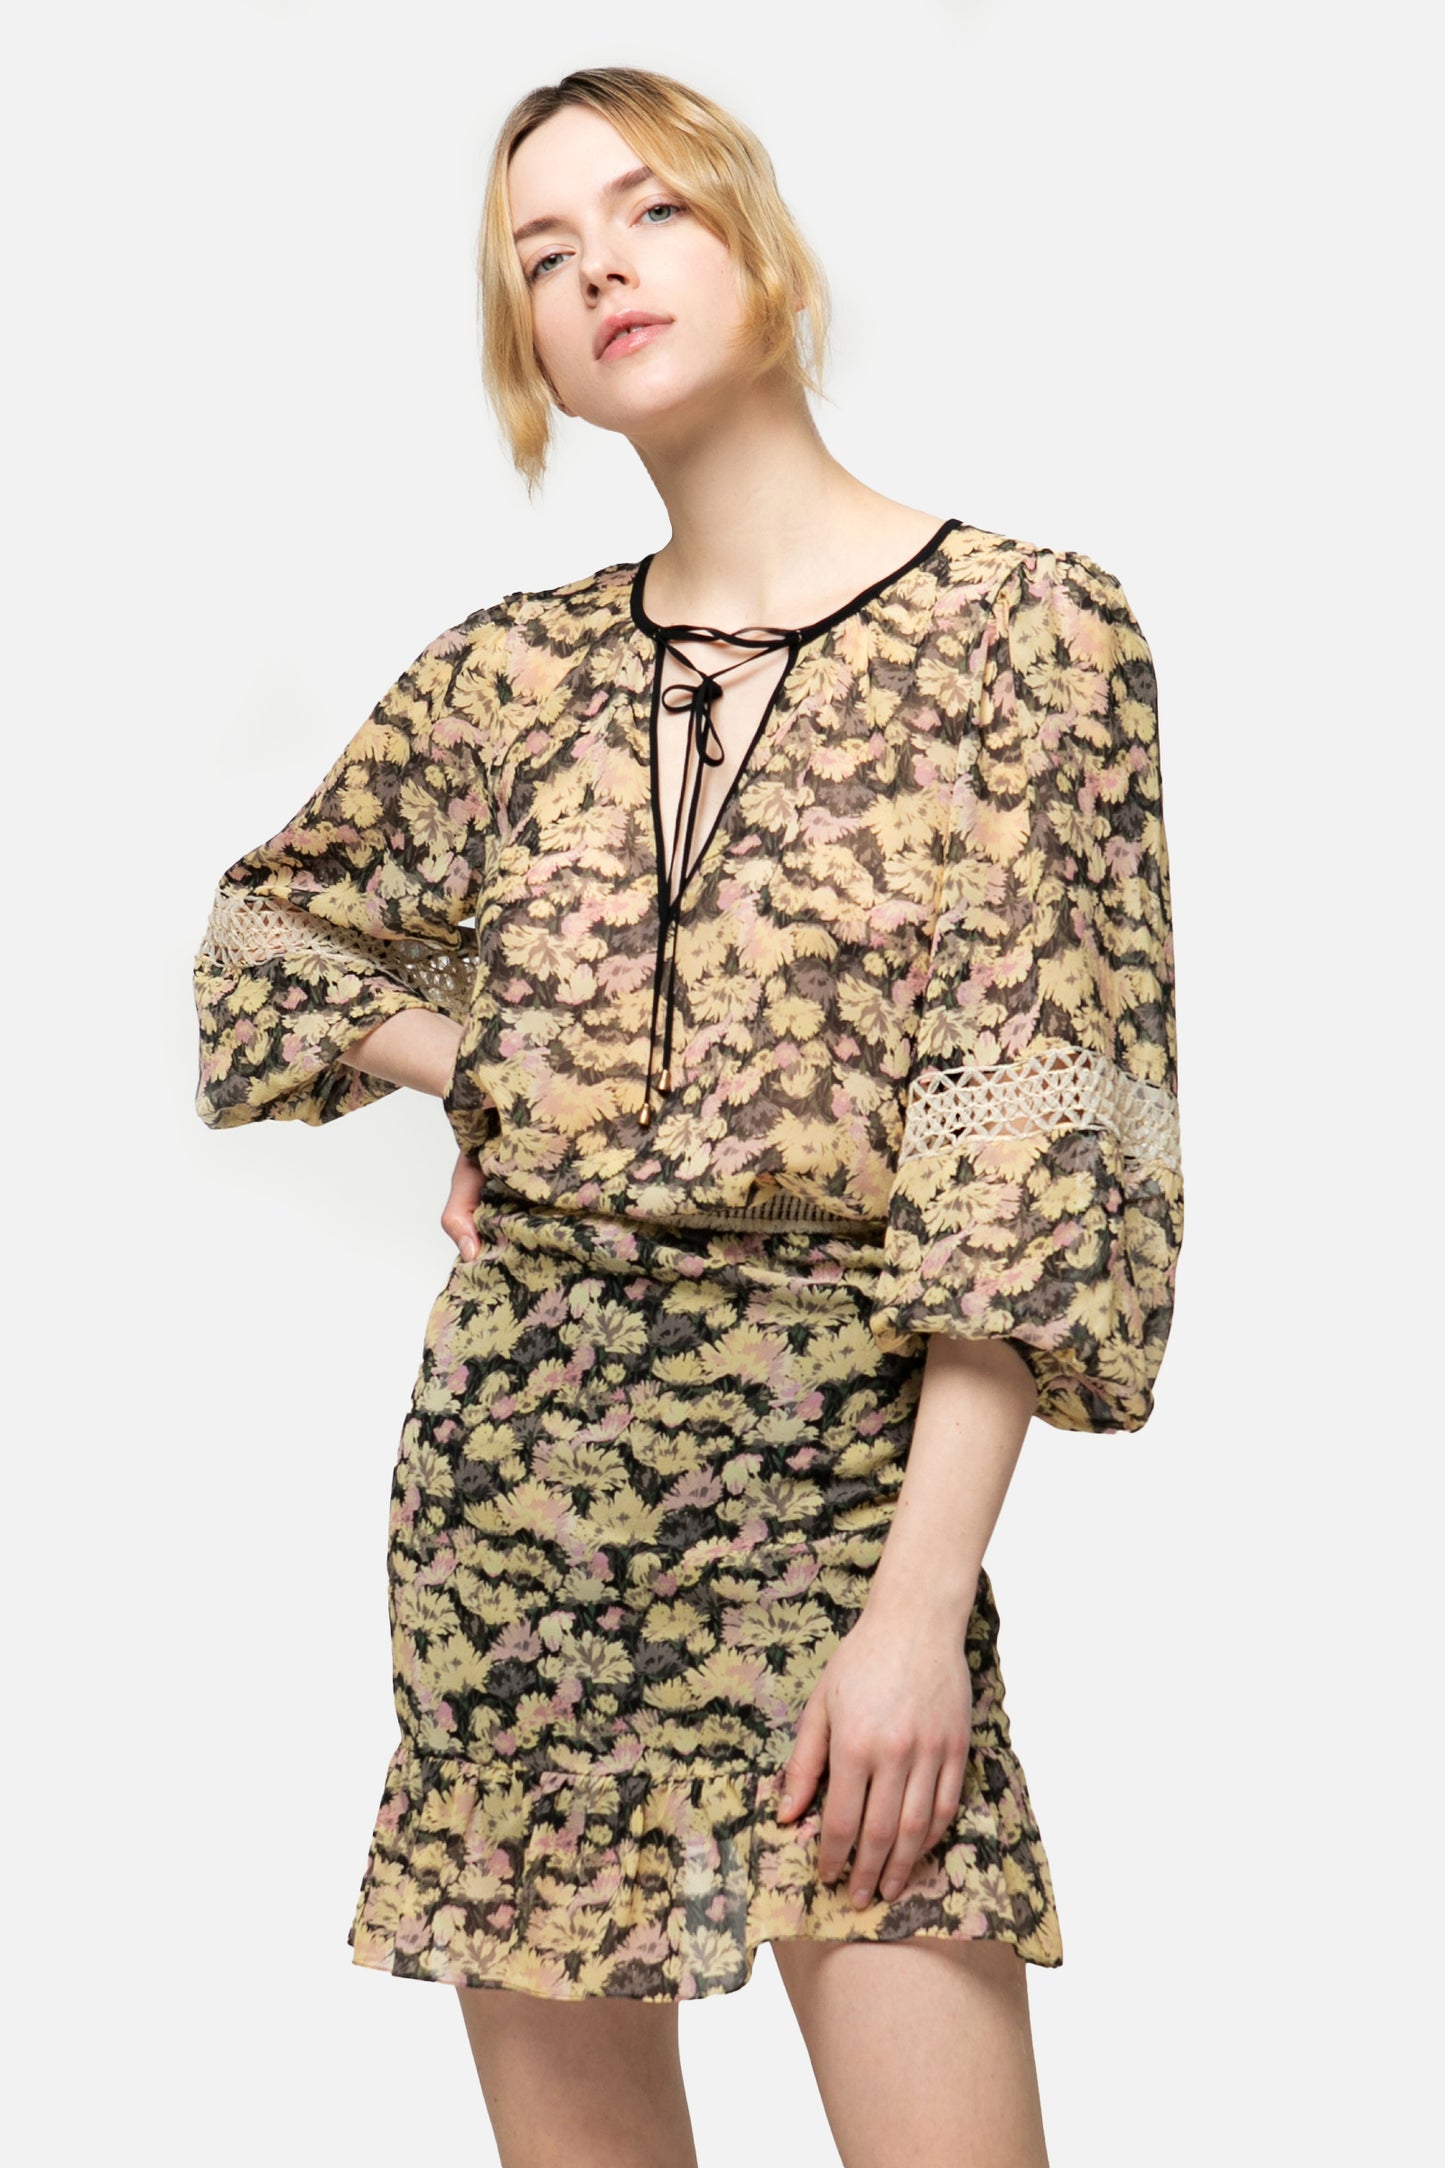 DAPHNE - Foliage lace-up blouse